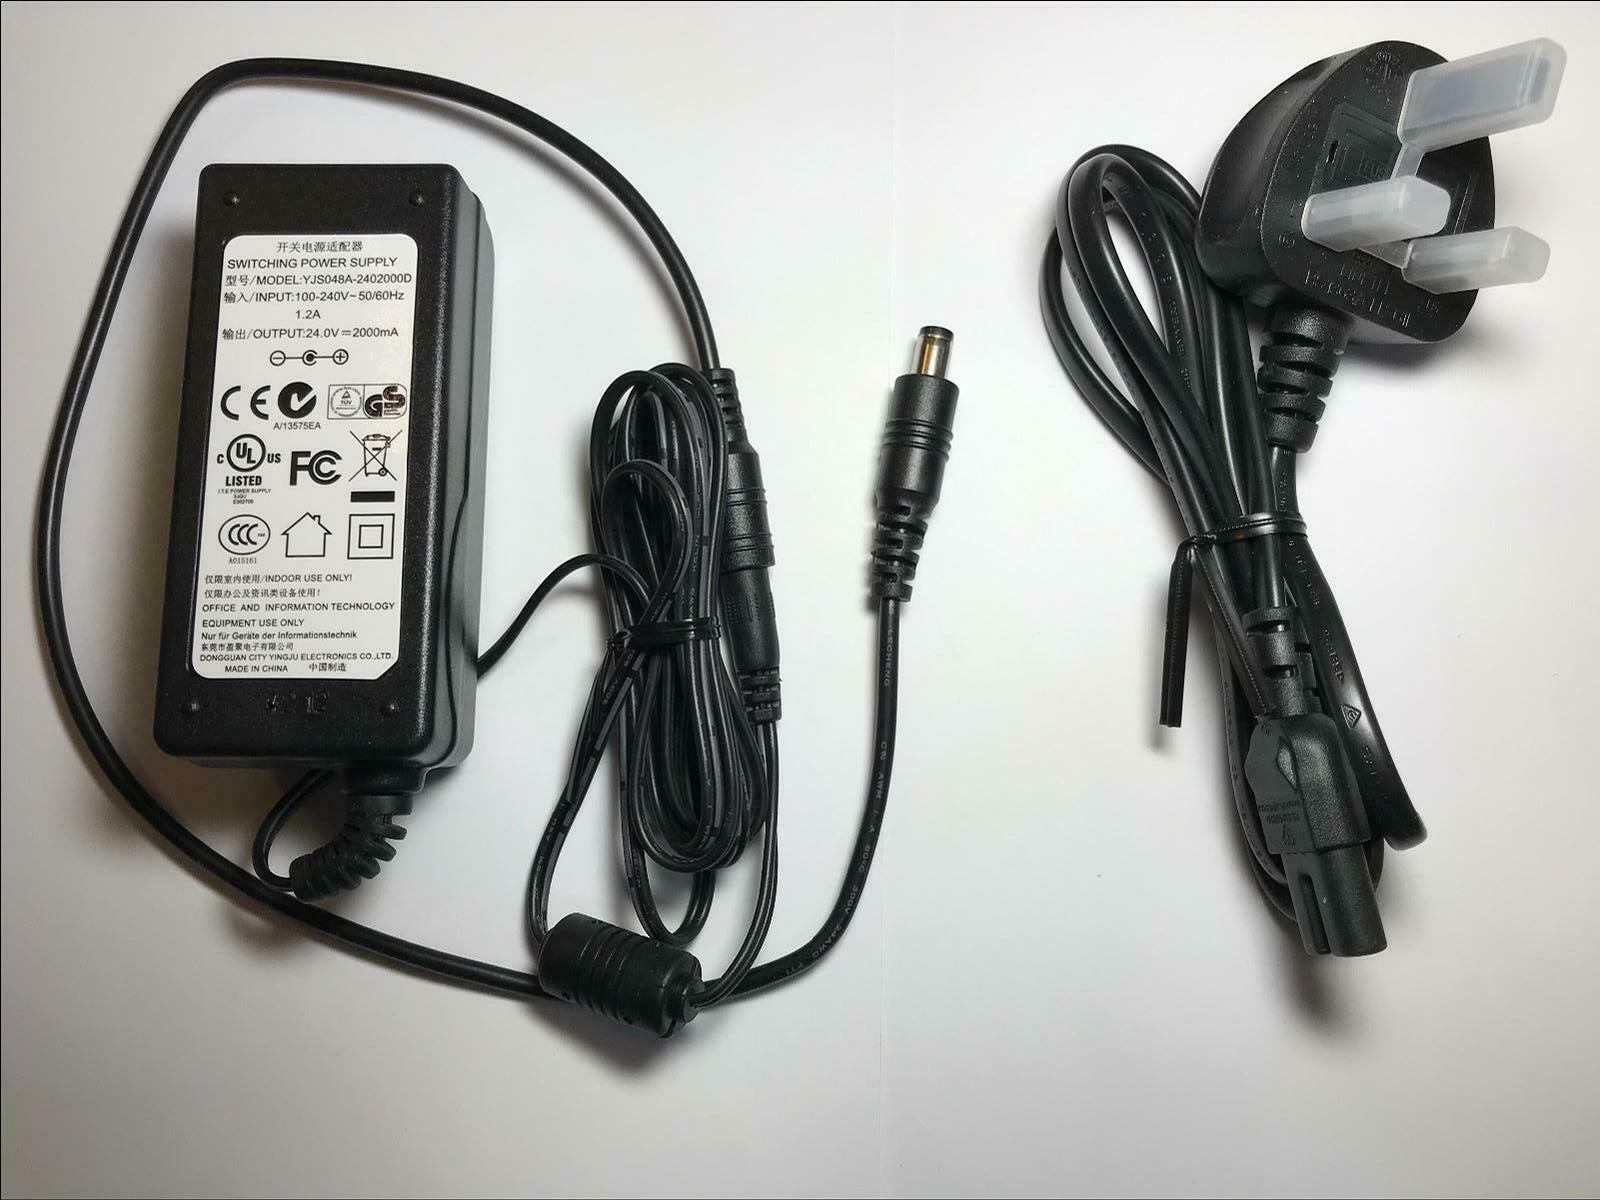 24V 2A AC-DC Adapter Power Supply for 25V LG NB4540 Sound Bar Audio System 24V 2A (perfect for 25V) ON/OFF Led Light